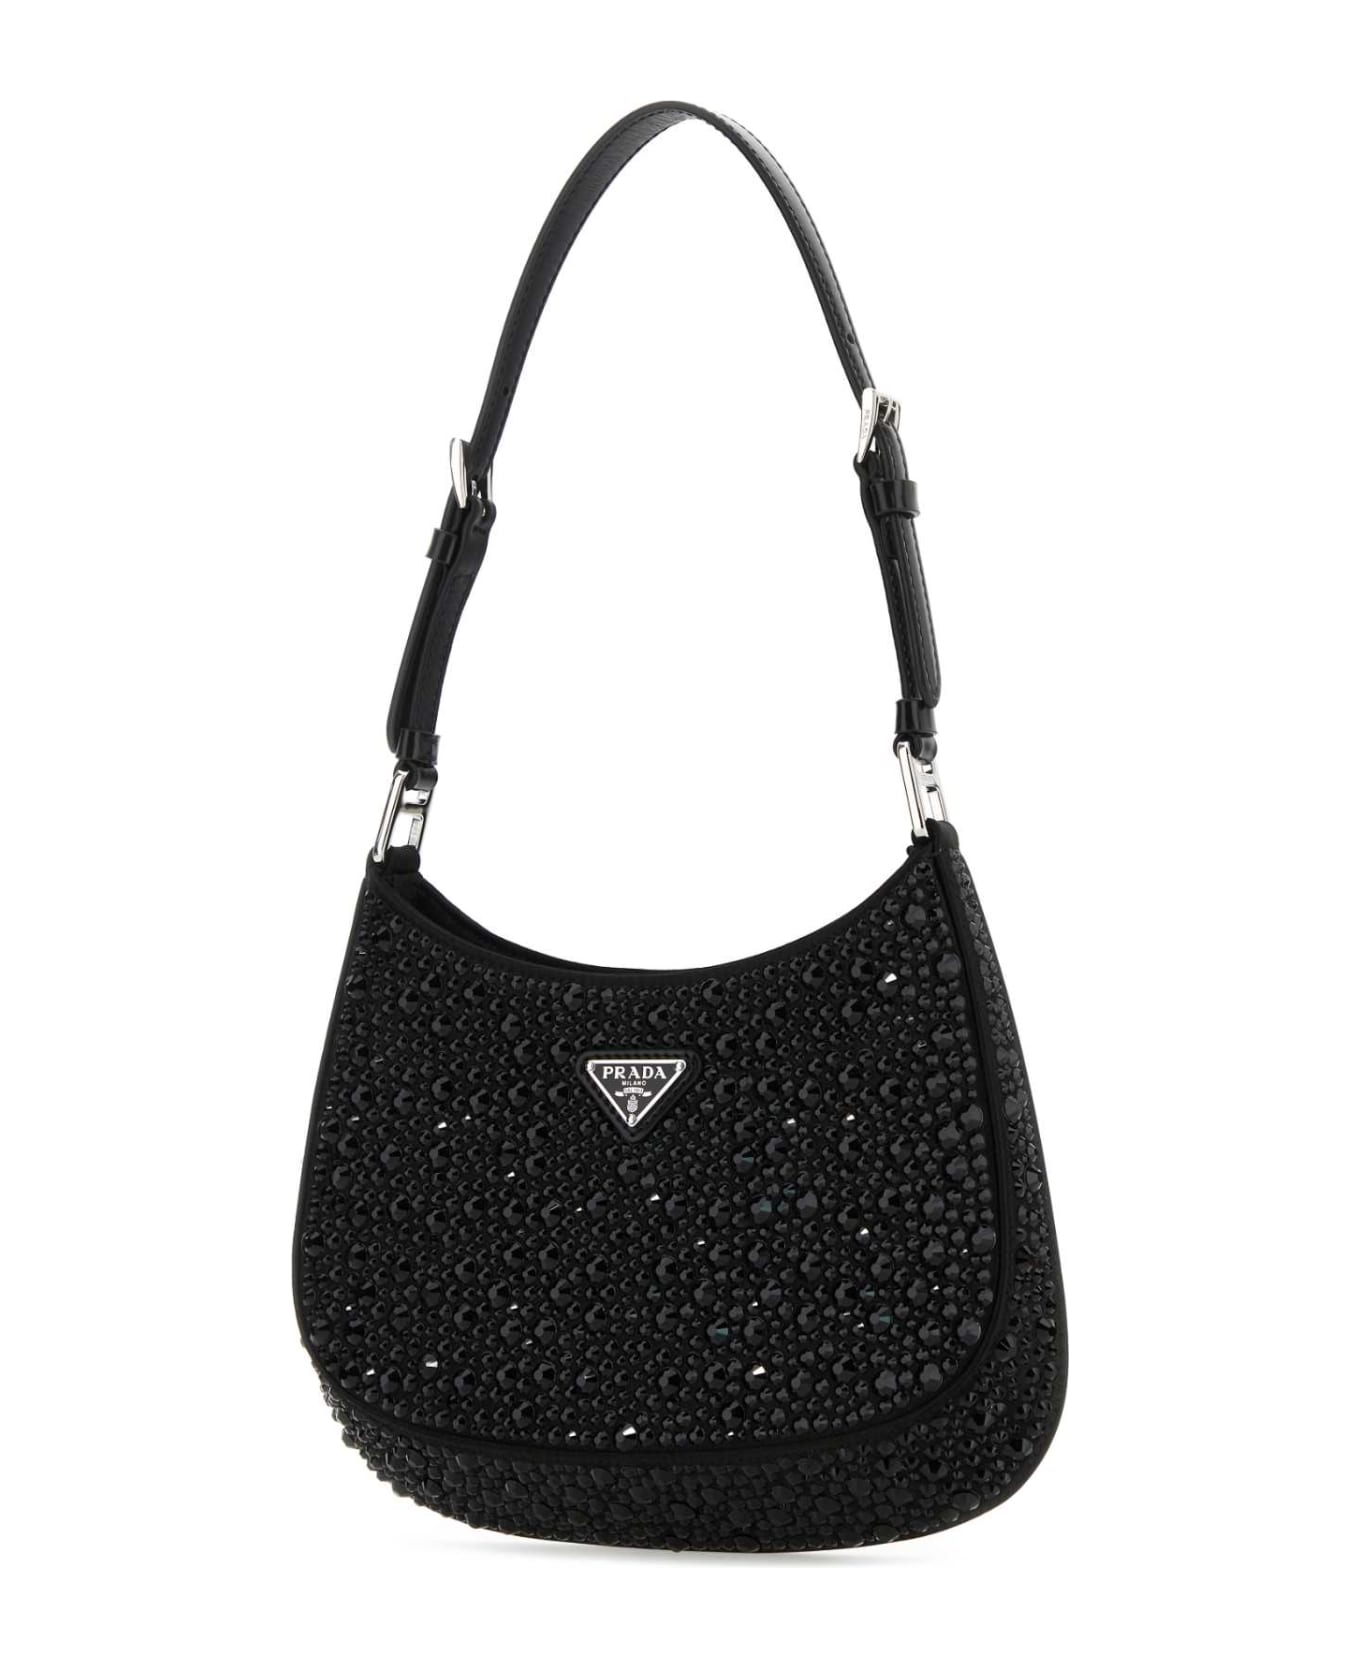 Prada Embellished Satin Cleo Handbag - NERO